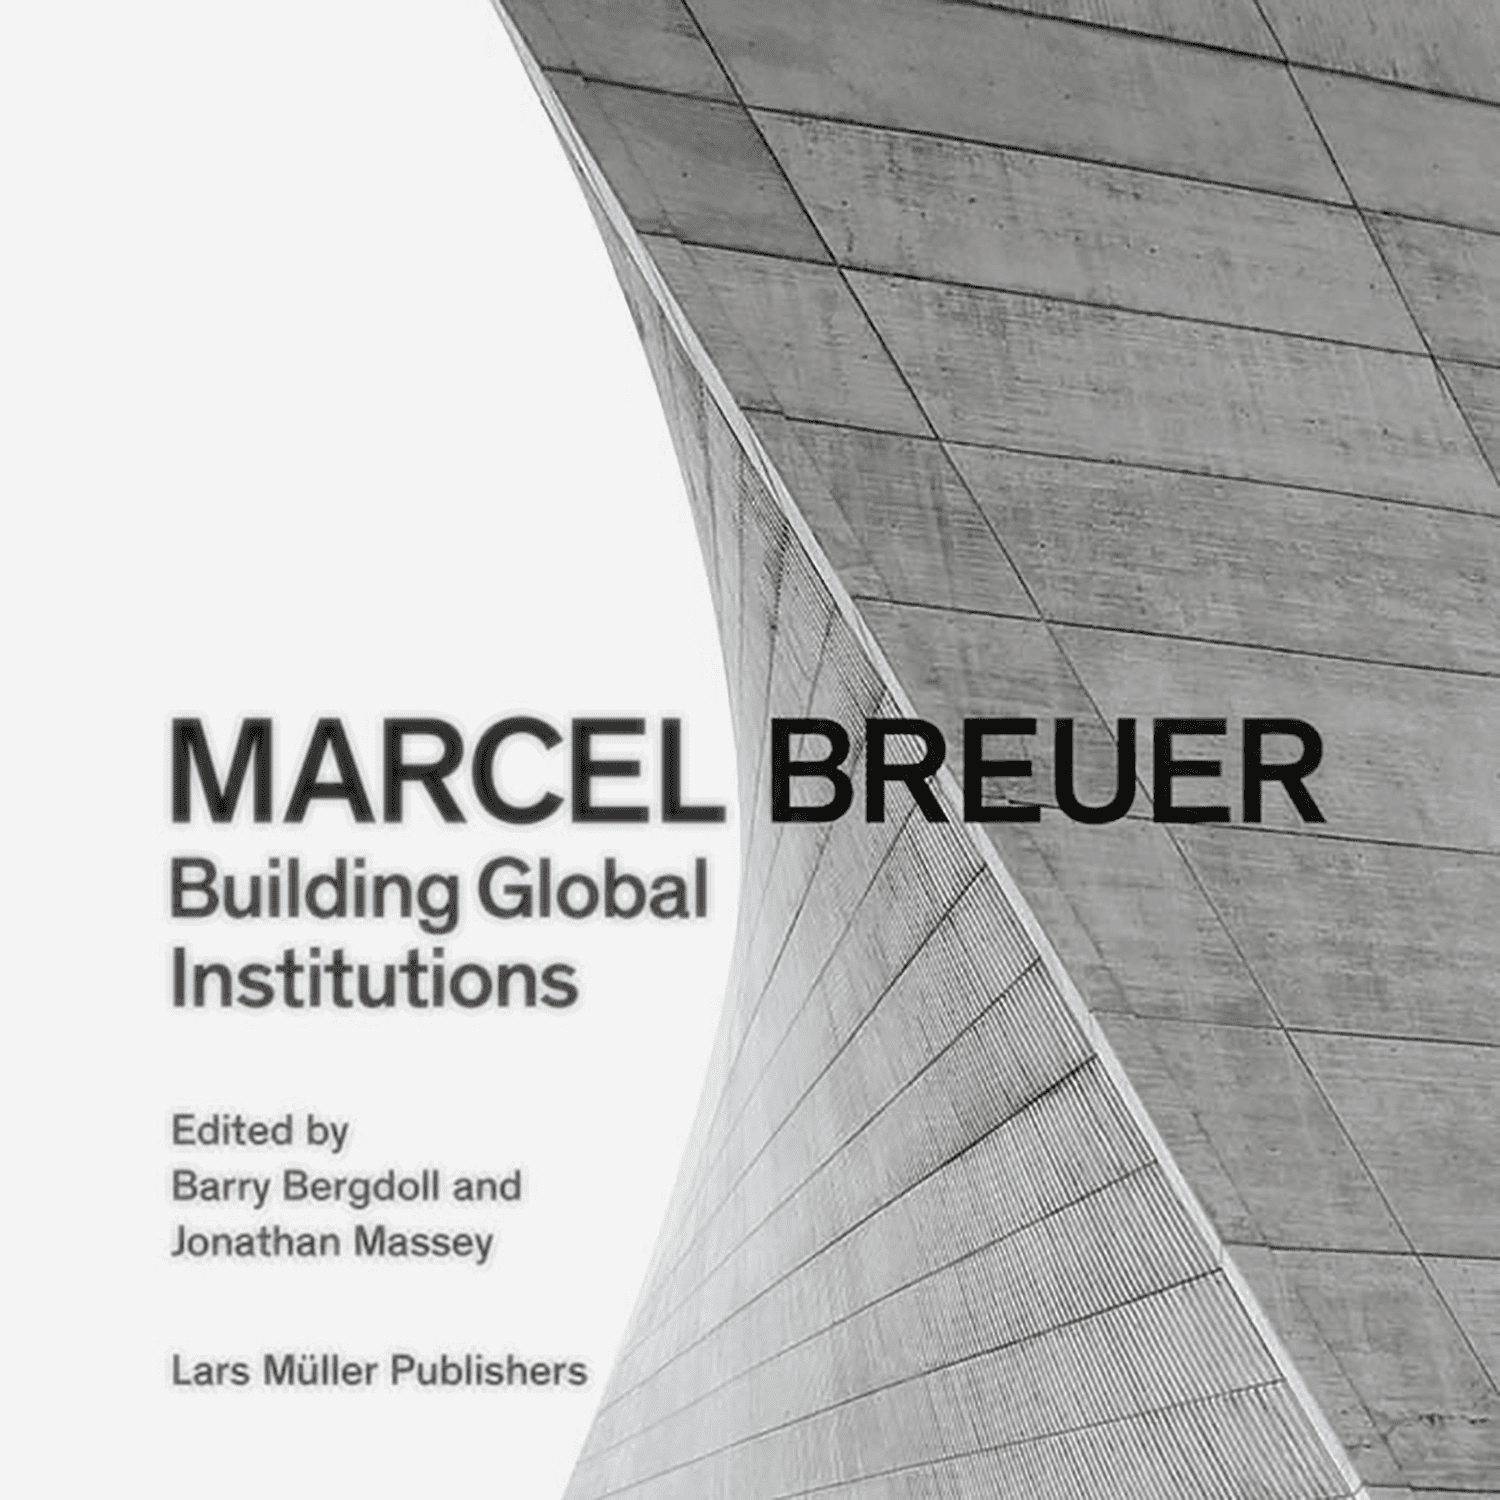 Immagine di Marcel Breuer - Costruire istituzioni globali